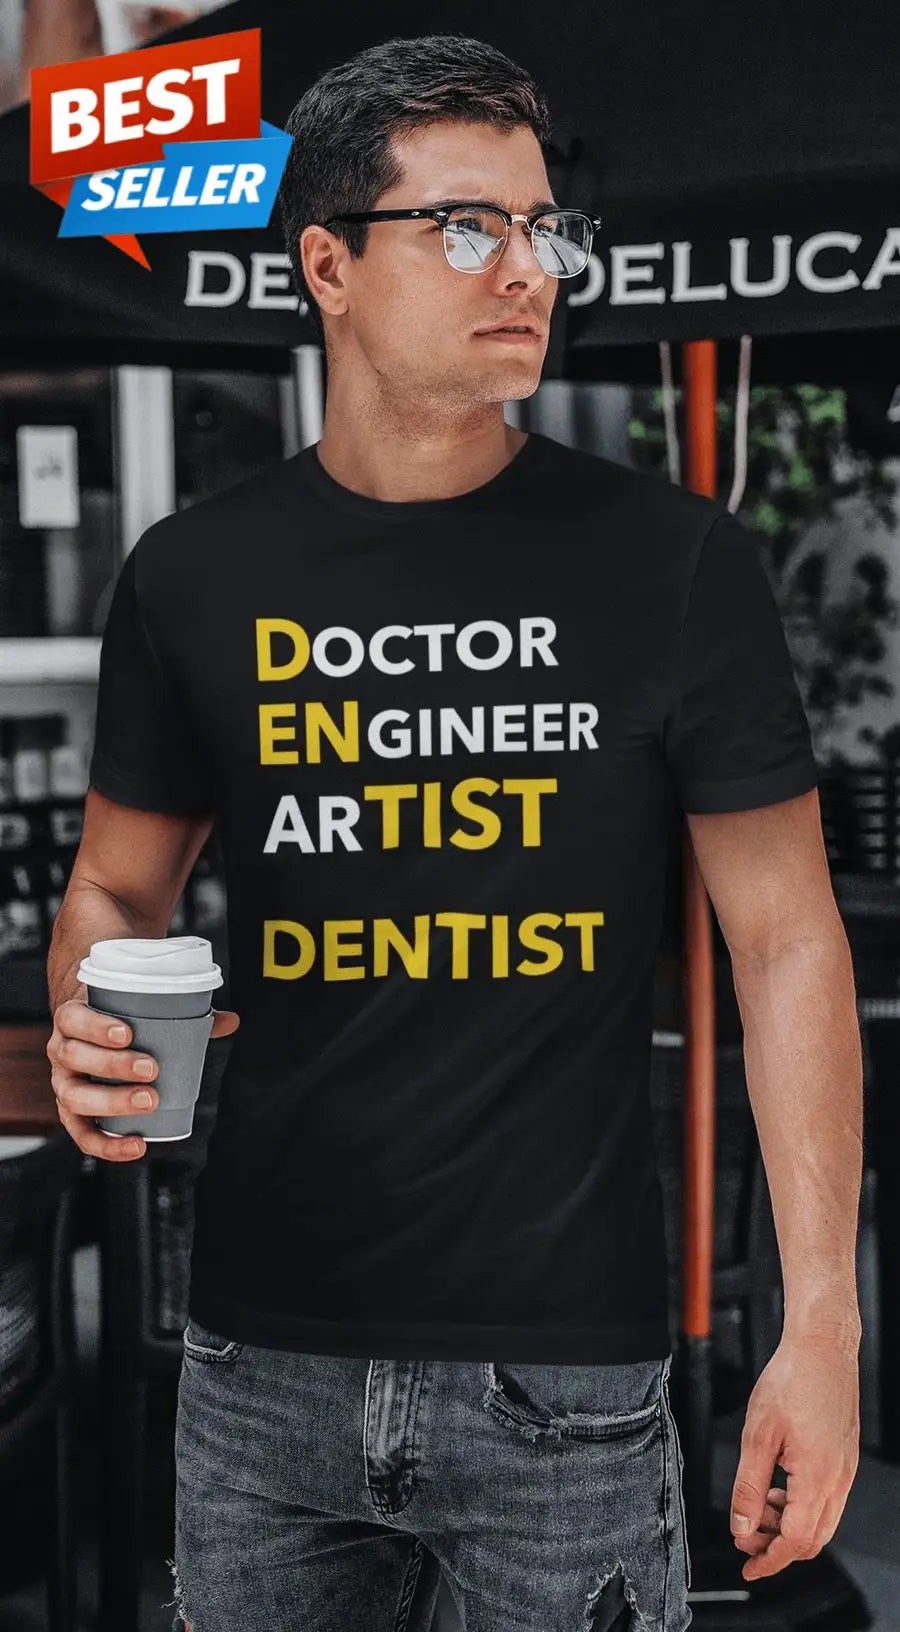 Dentist "DEA" T-Shirt for Men | Premium Design | Catch My Drift India - Catch My Drift India Clothing black, clothing, dentist, made in india, shirt, t shirt, tshirt